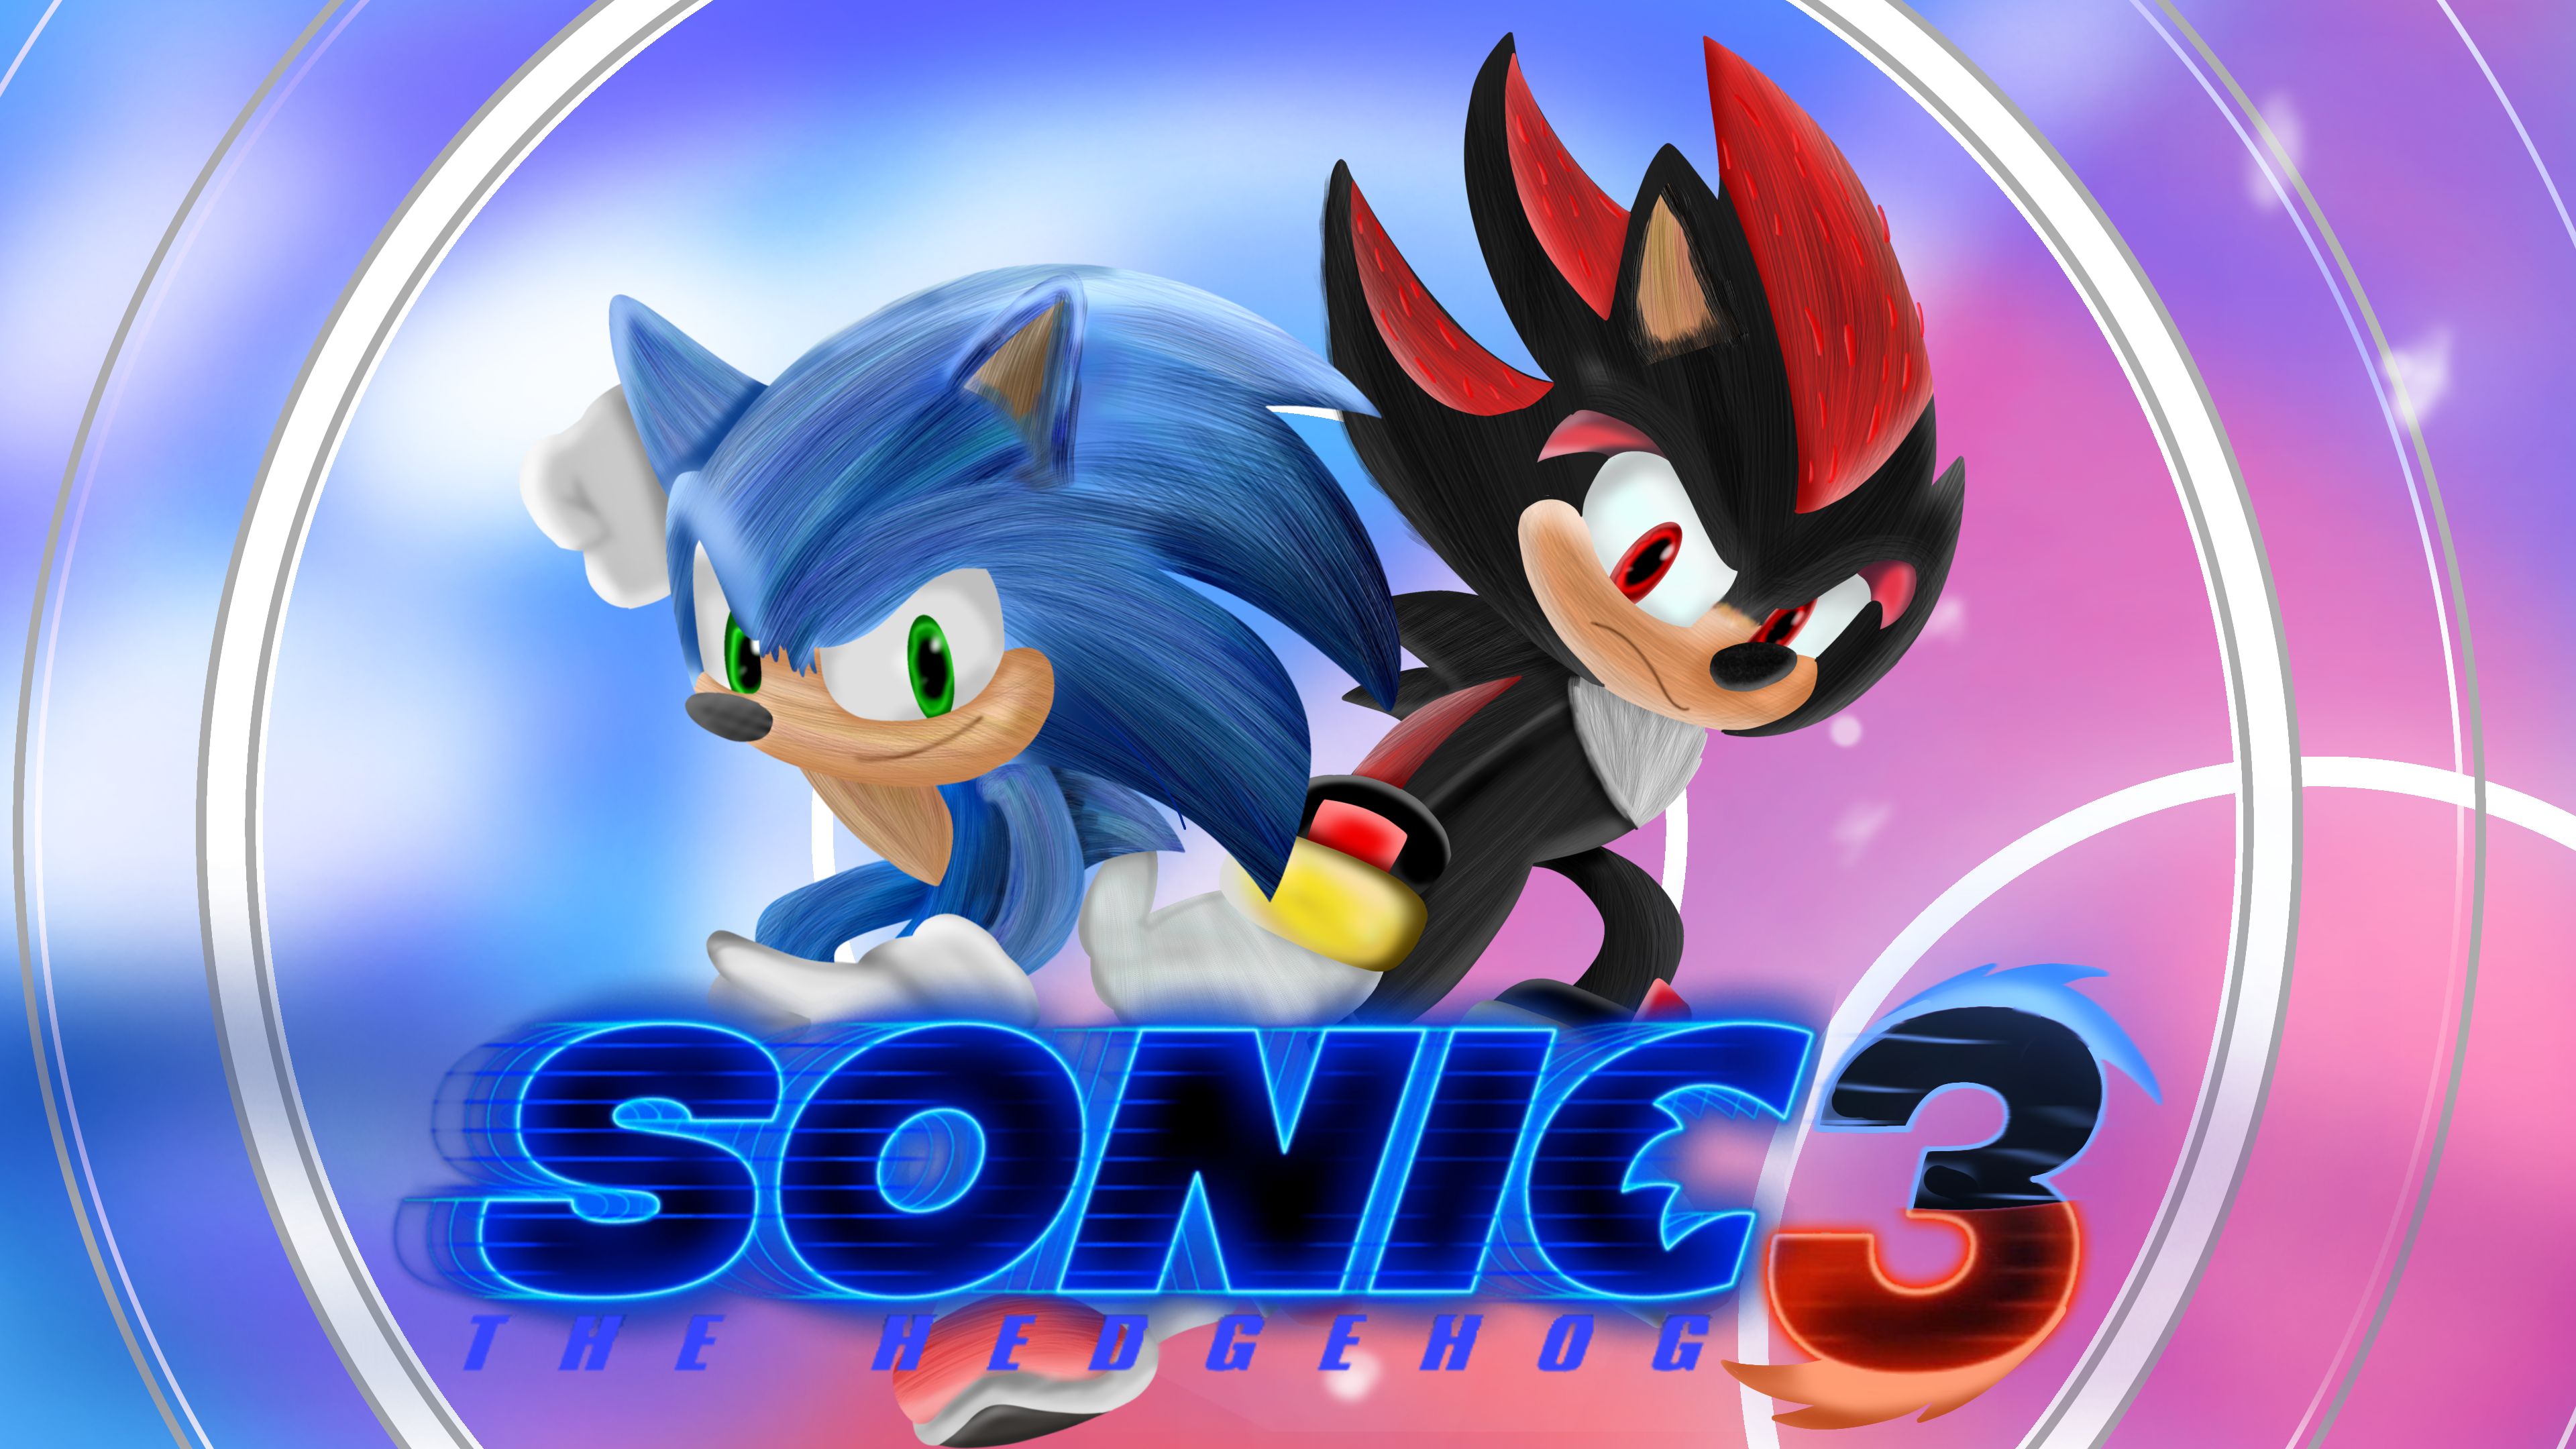 So I made a Sonic Movie 3 poster : r/SonicTheHedgehog